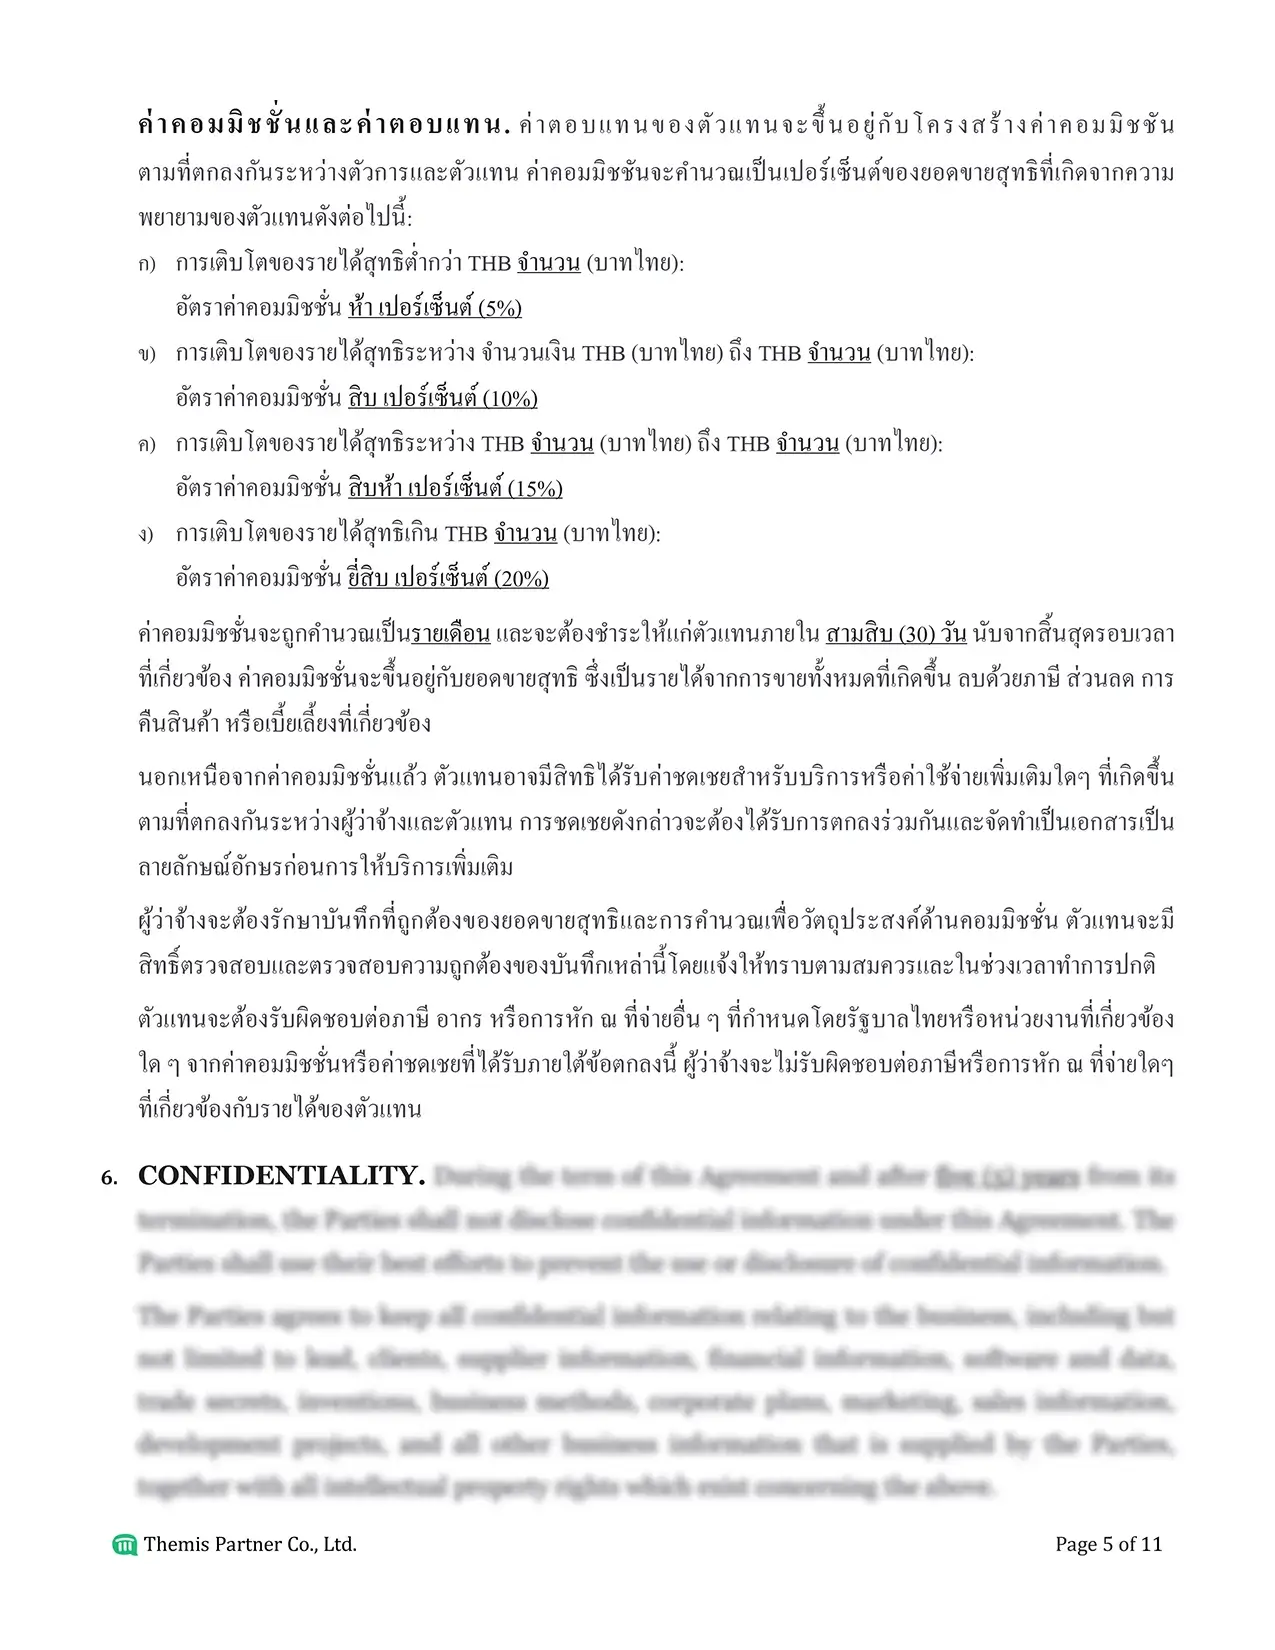 Agency agreement Thailand 5